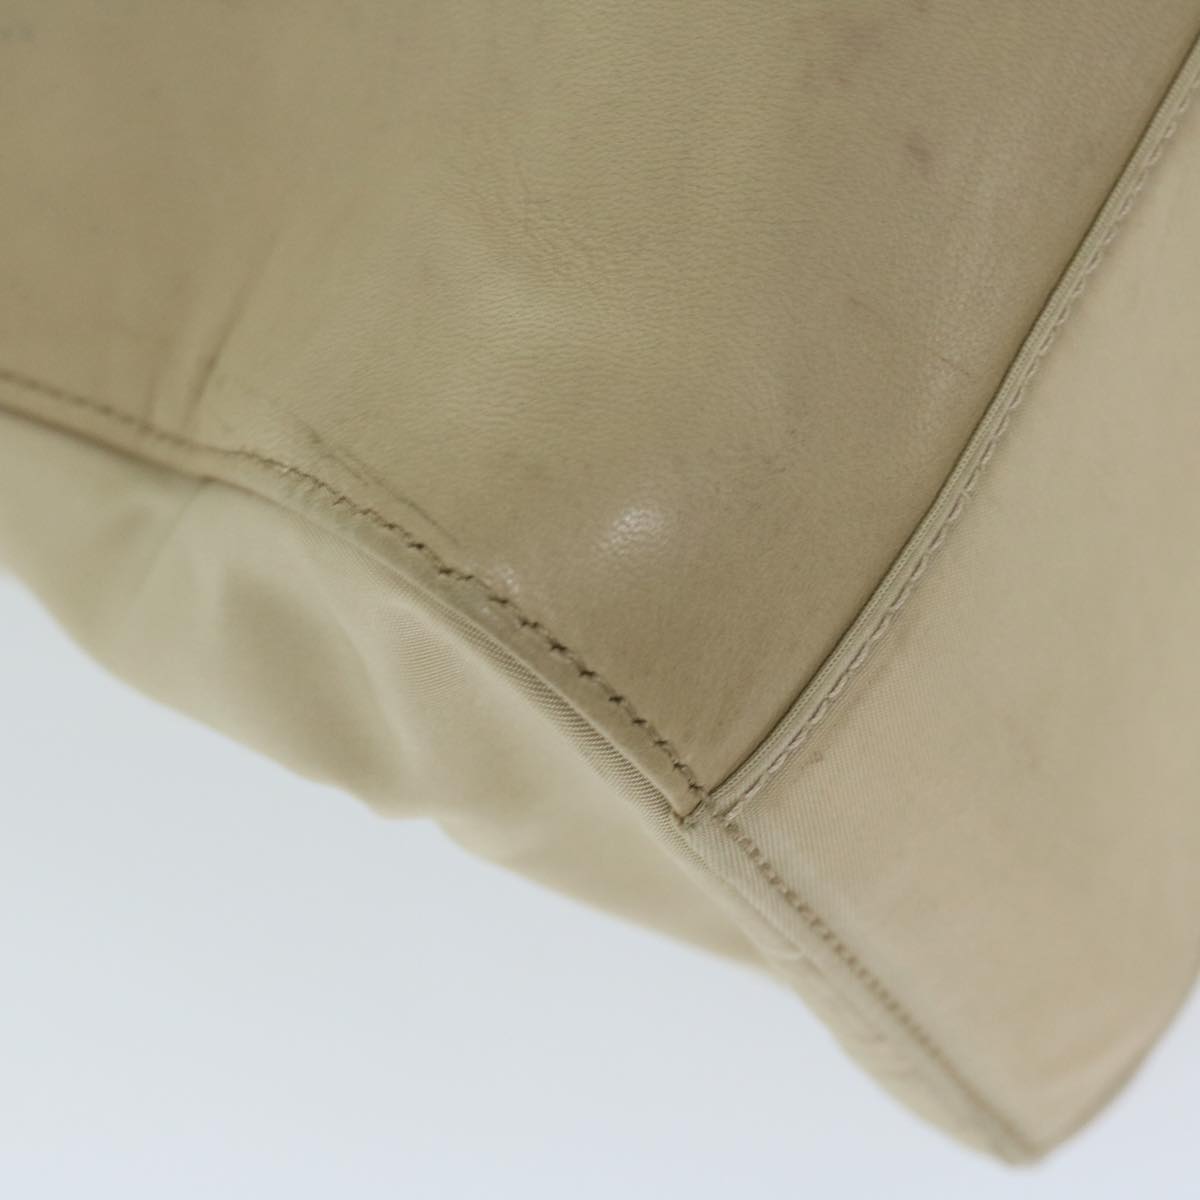 PRADA Chain Shoulder Bag Leather Beige Auth yk10950